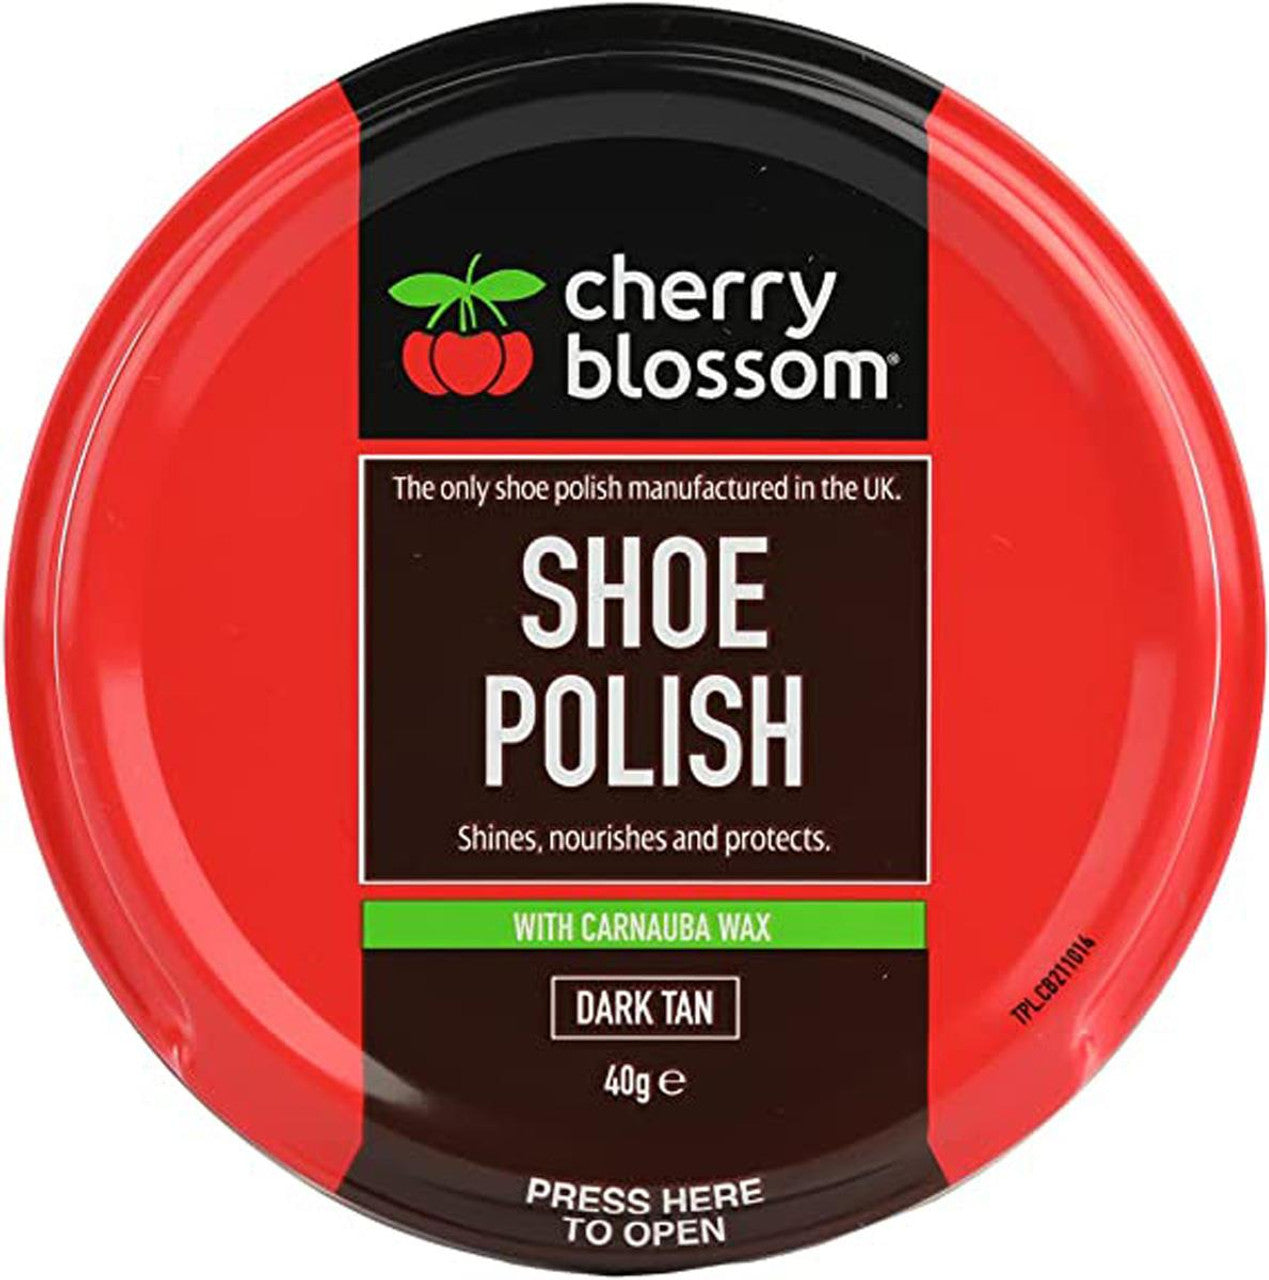 A tin of dark tan shoe polish by Cherry Blossom.